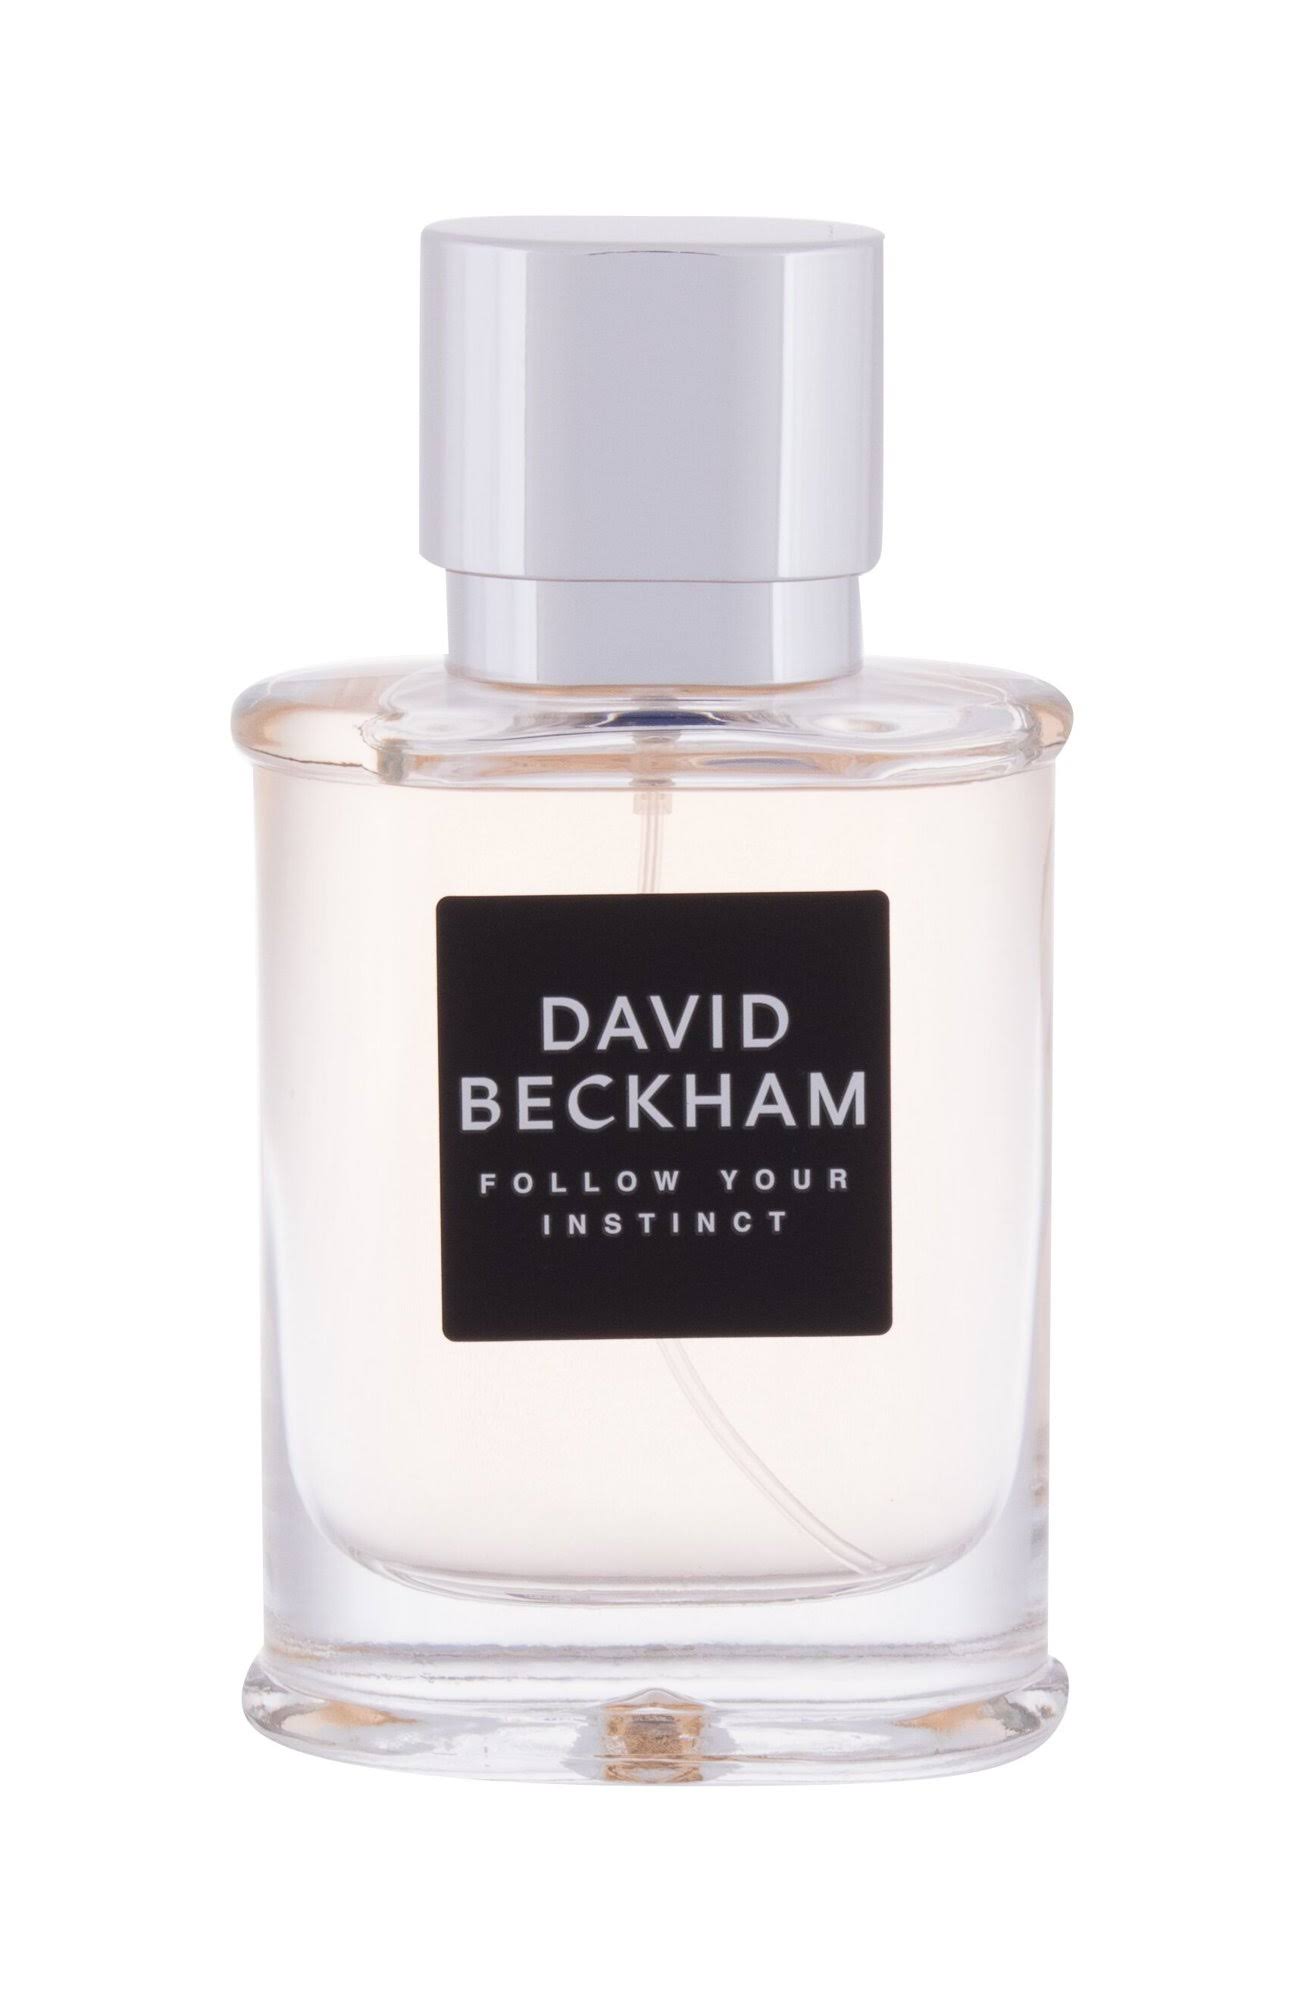 David Beckham Follow Your Instinct Eau de Toilette Spray 50ml/1.7oz